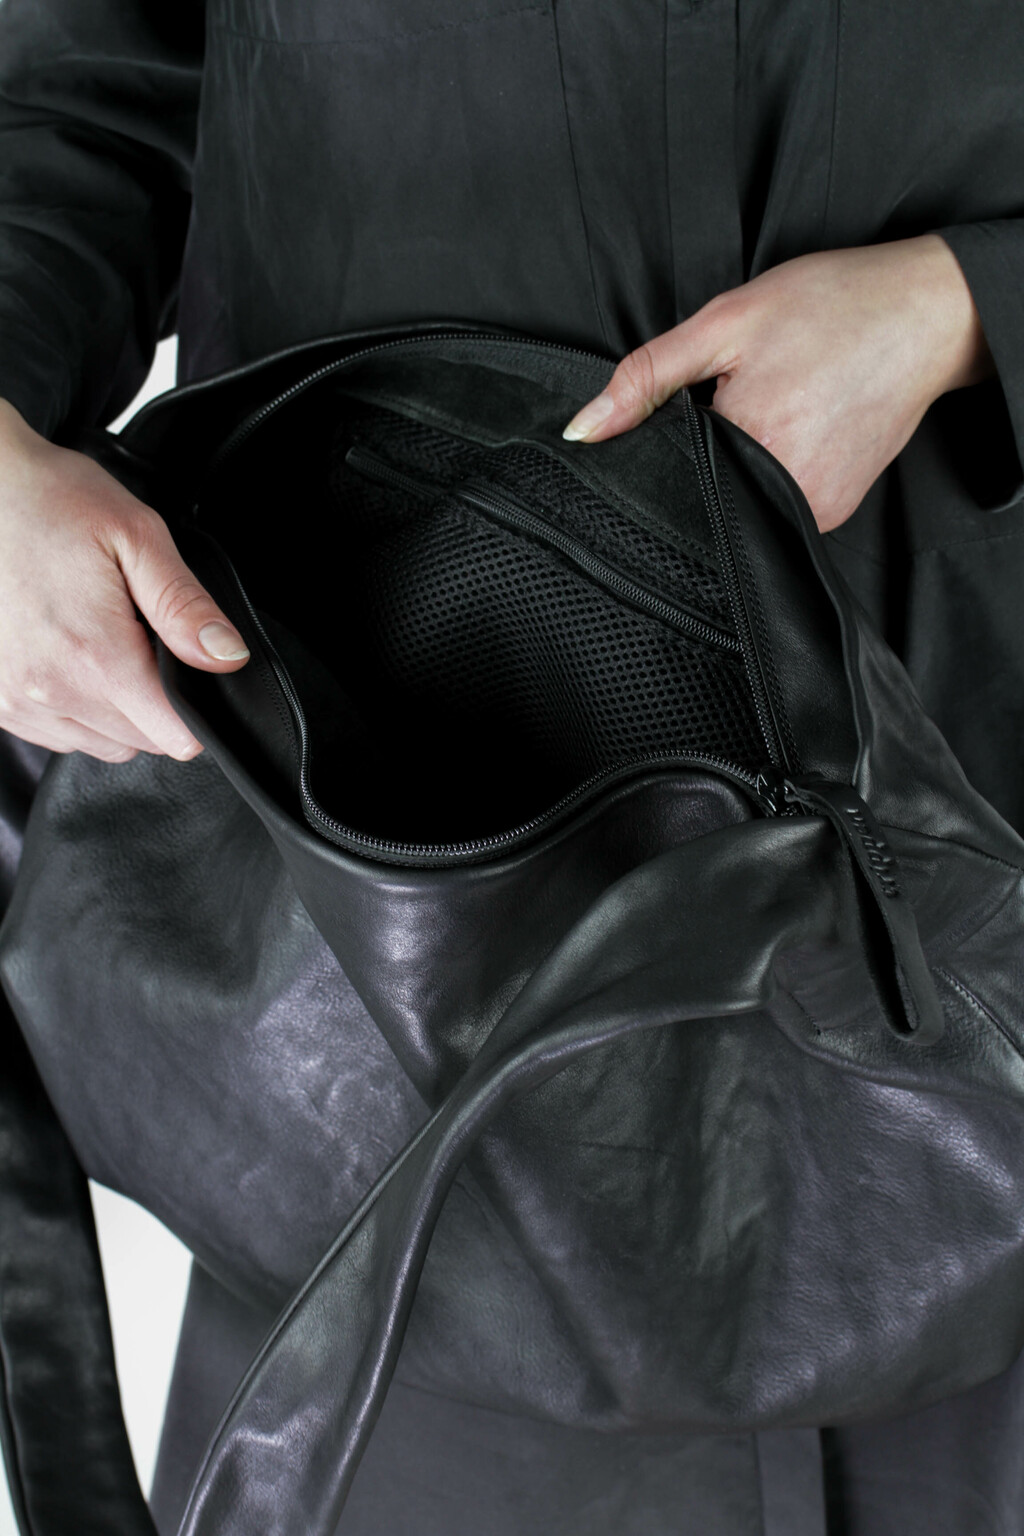 [Korean Style] Minimalistic Medium Size Liege Leather Box Bag Brown / 20X7X15 cm